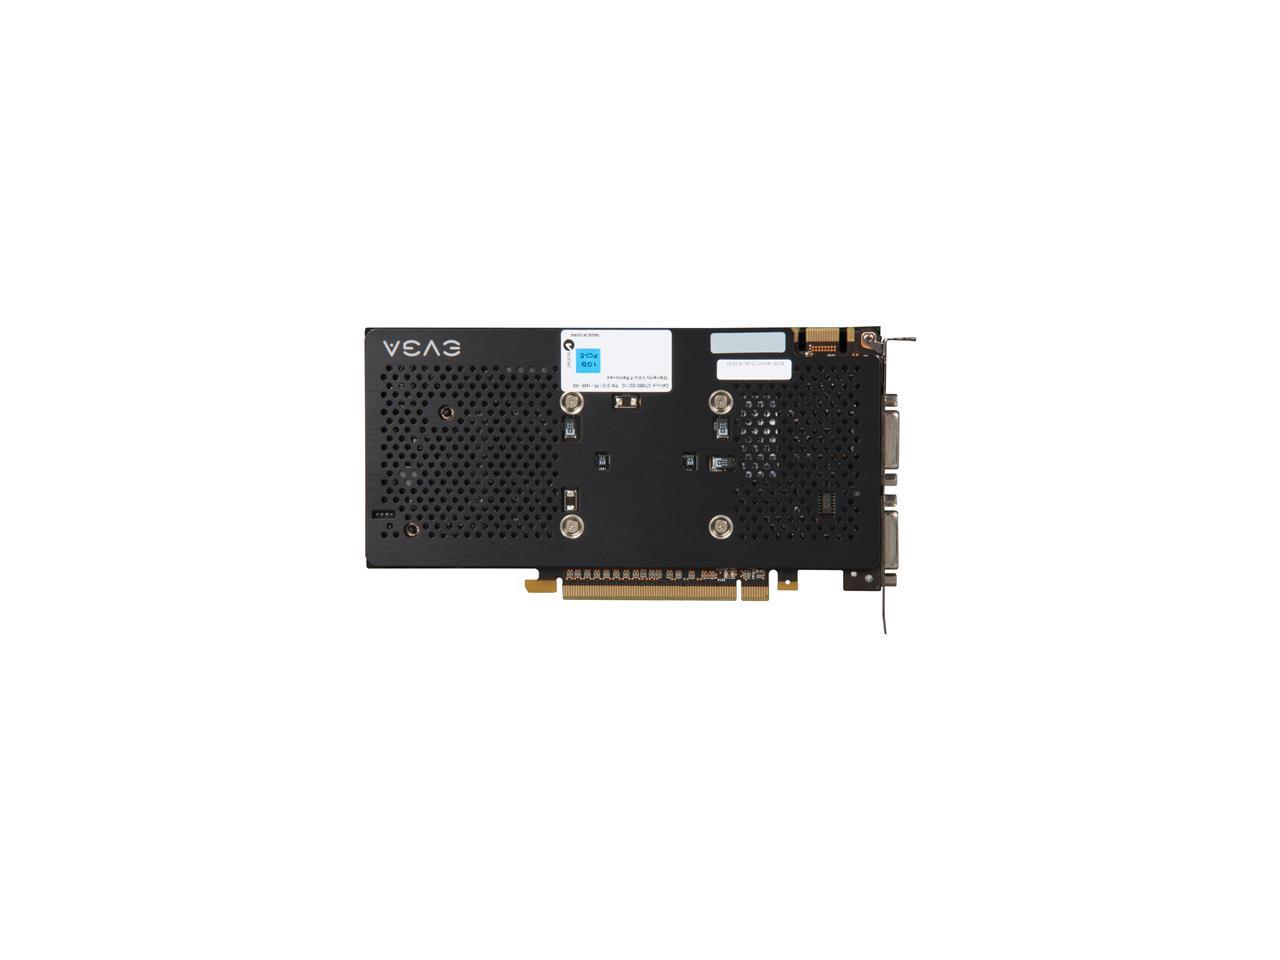 EVGA 01G-P3-1466-KR GeForce GTX 560 (Fermi) DS SSC 1GB 256-bit GDDR5 PCI Express 2.0 x16 HDCP Ready SLI Support Video Card